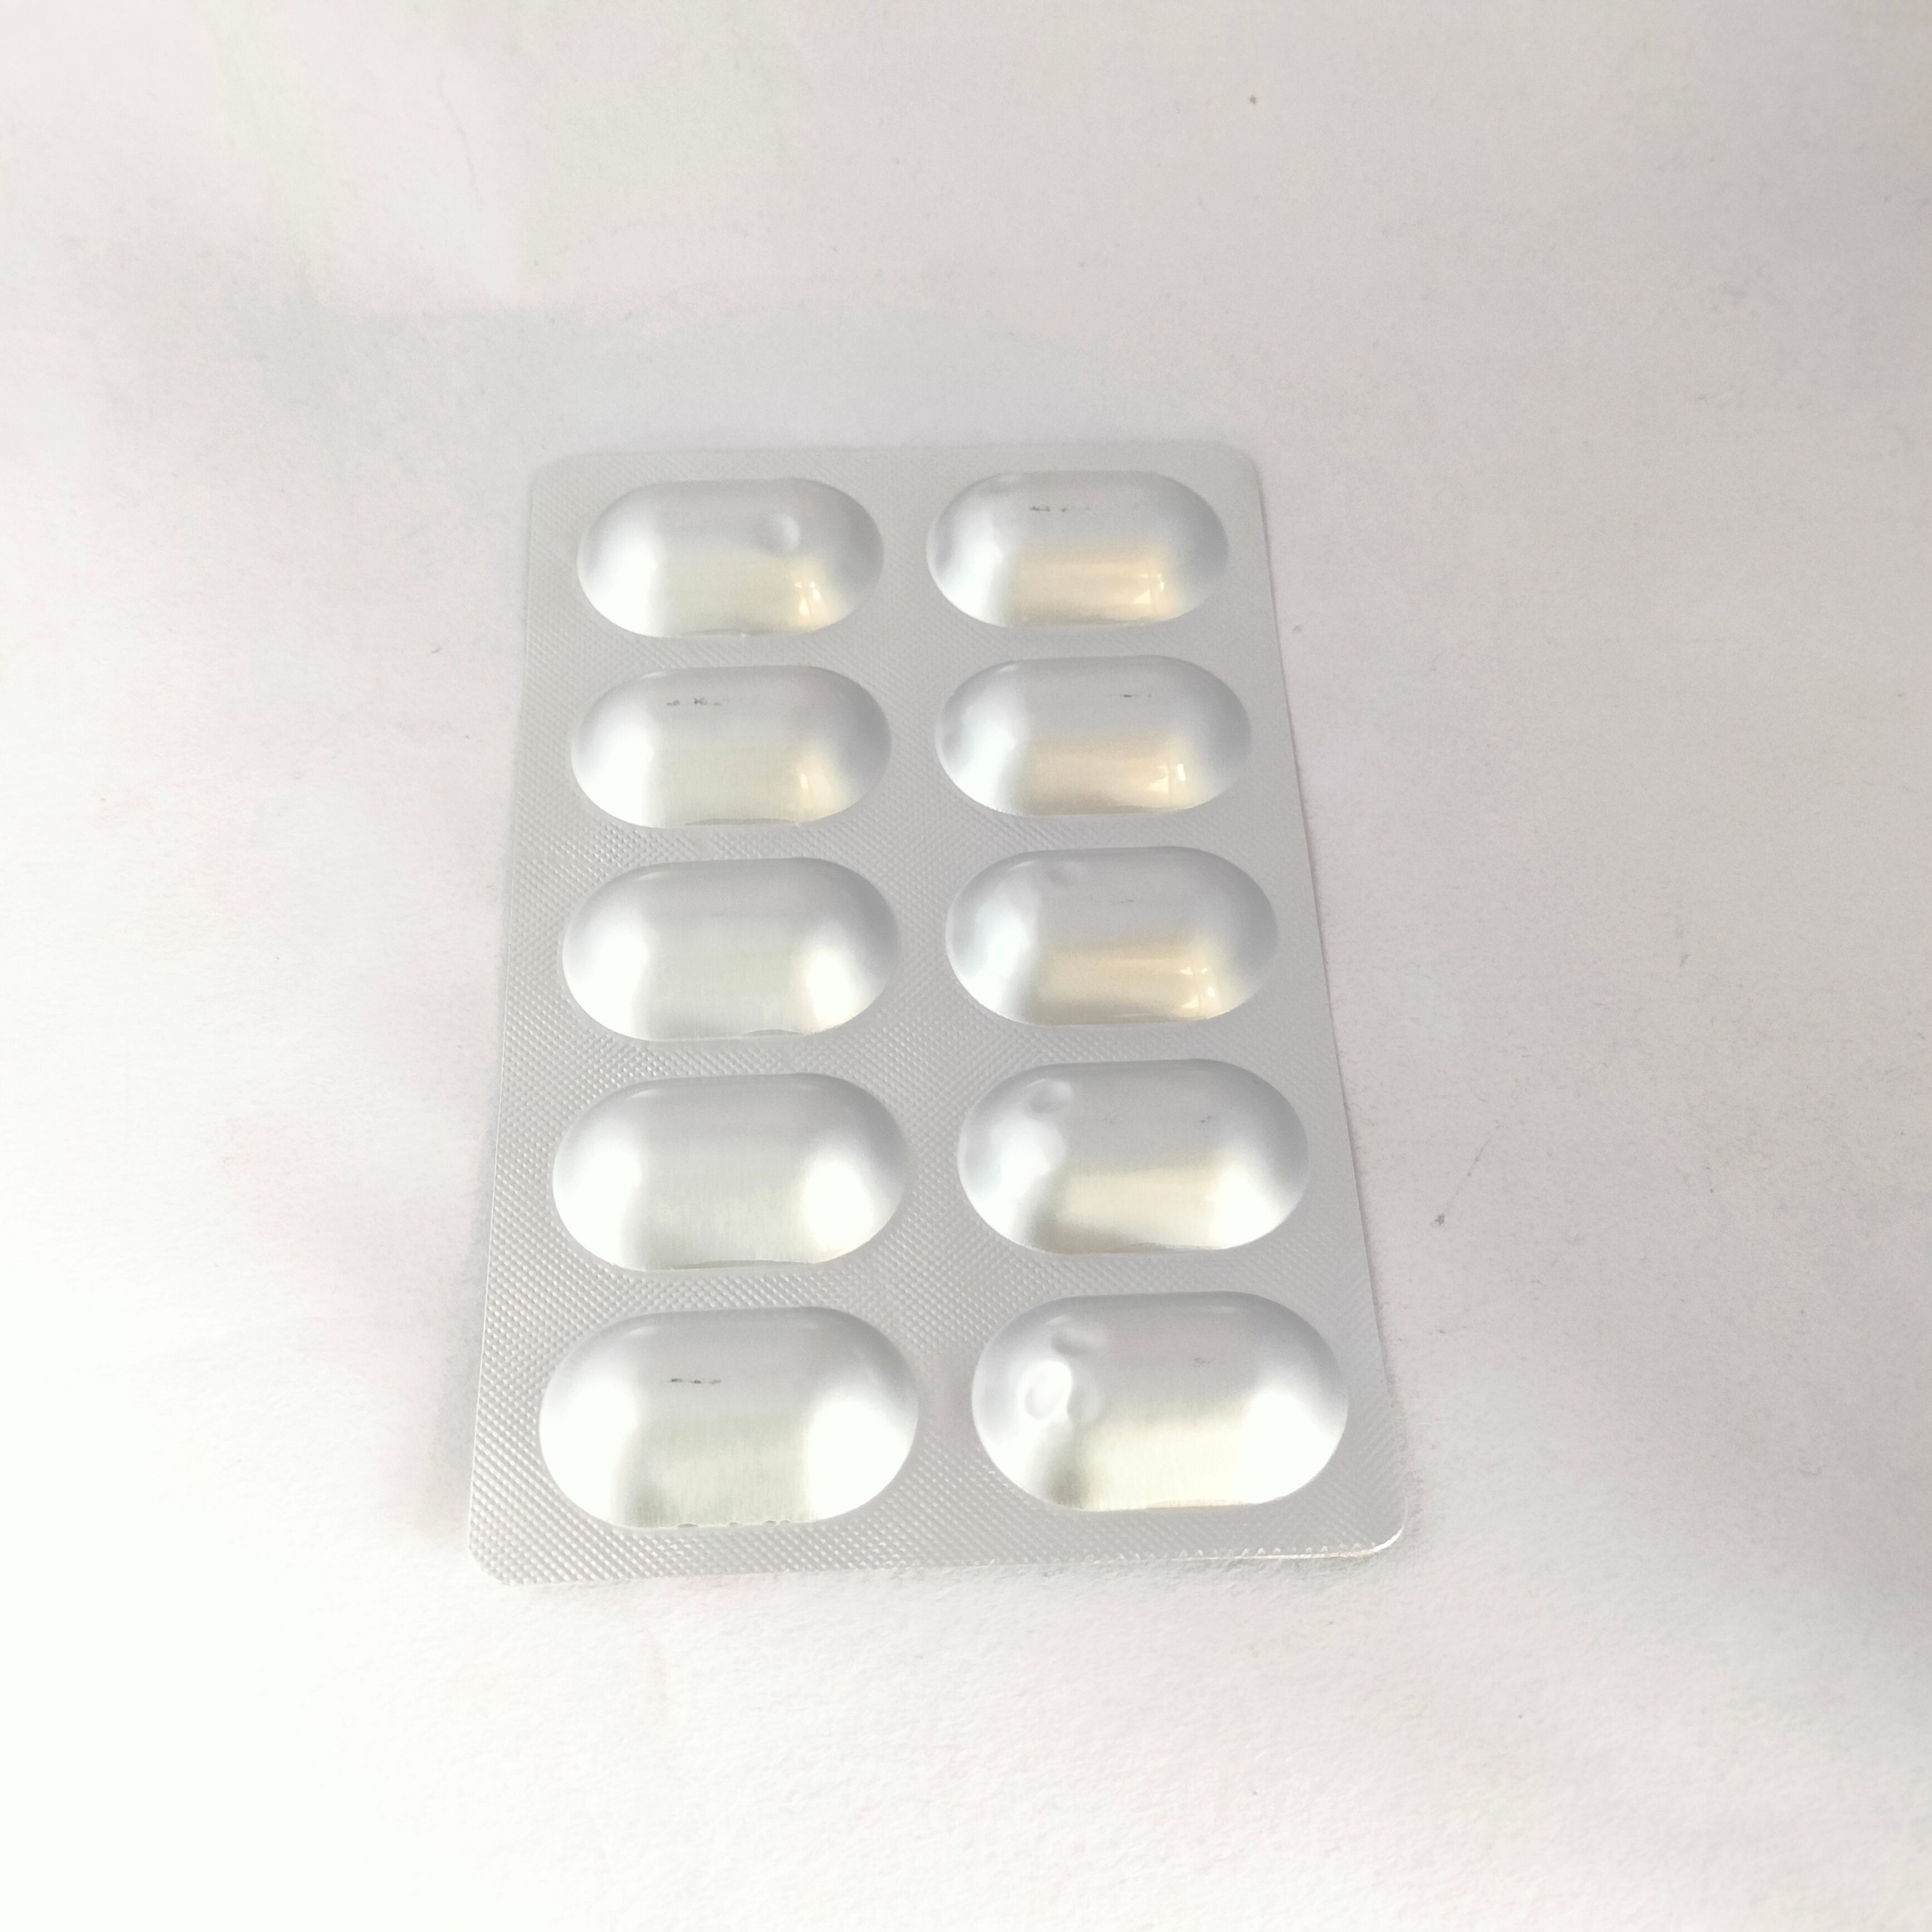 Atorvastatin asp and clopidogrel tablets